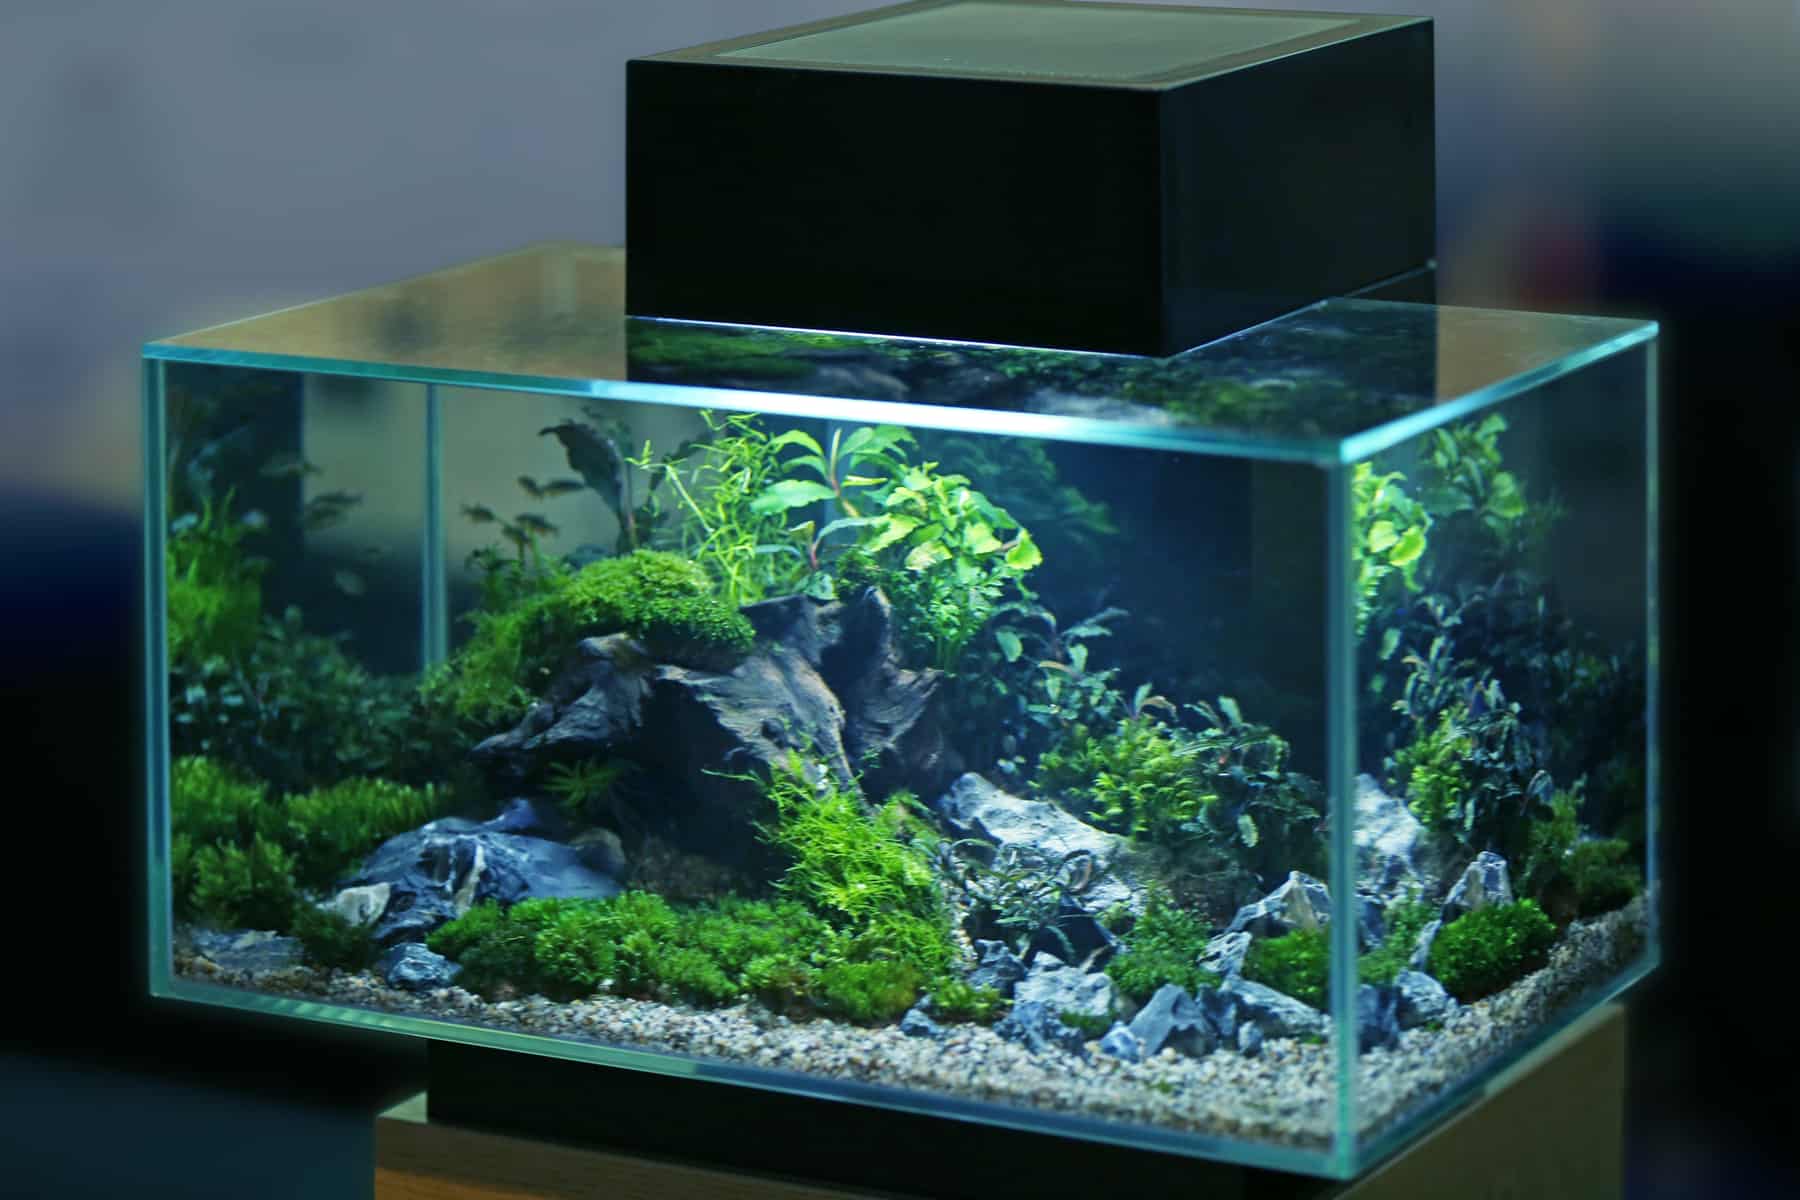 How to build a sump for aquarium